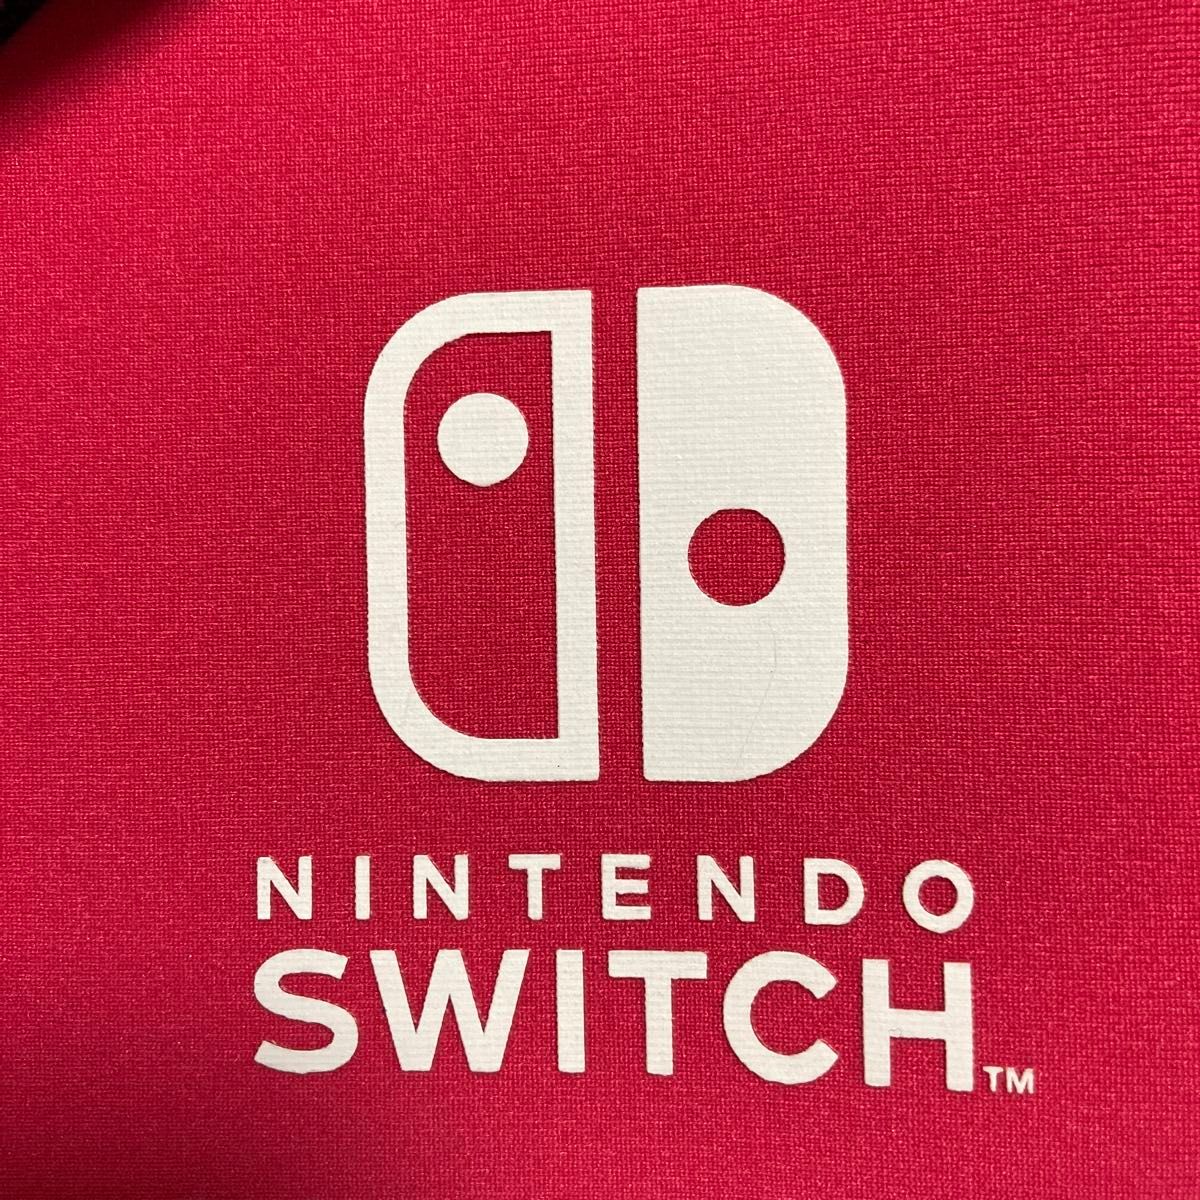 Nintendo Switch ニンテンドースイッチ 収納ケース ソフトケース ピンク スイッチ 任天堂